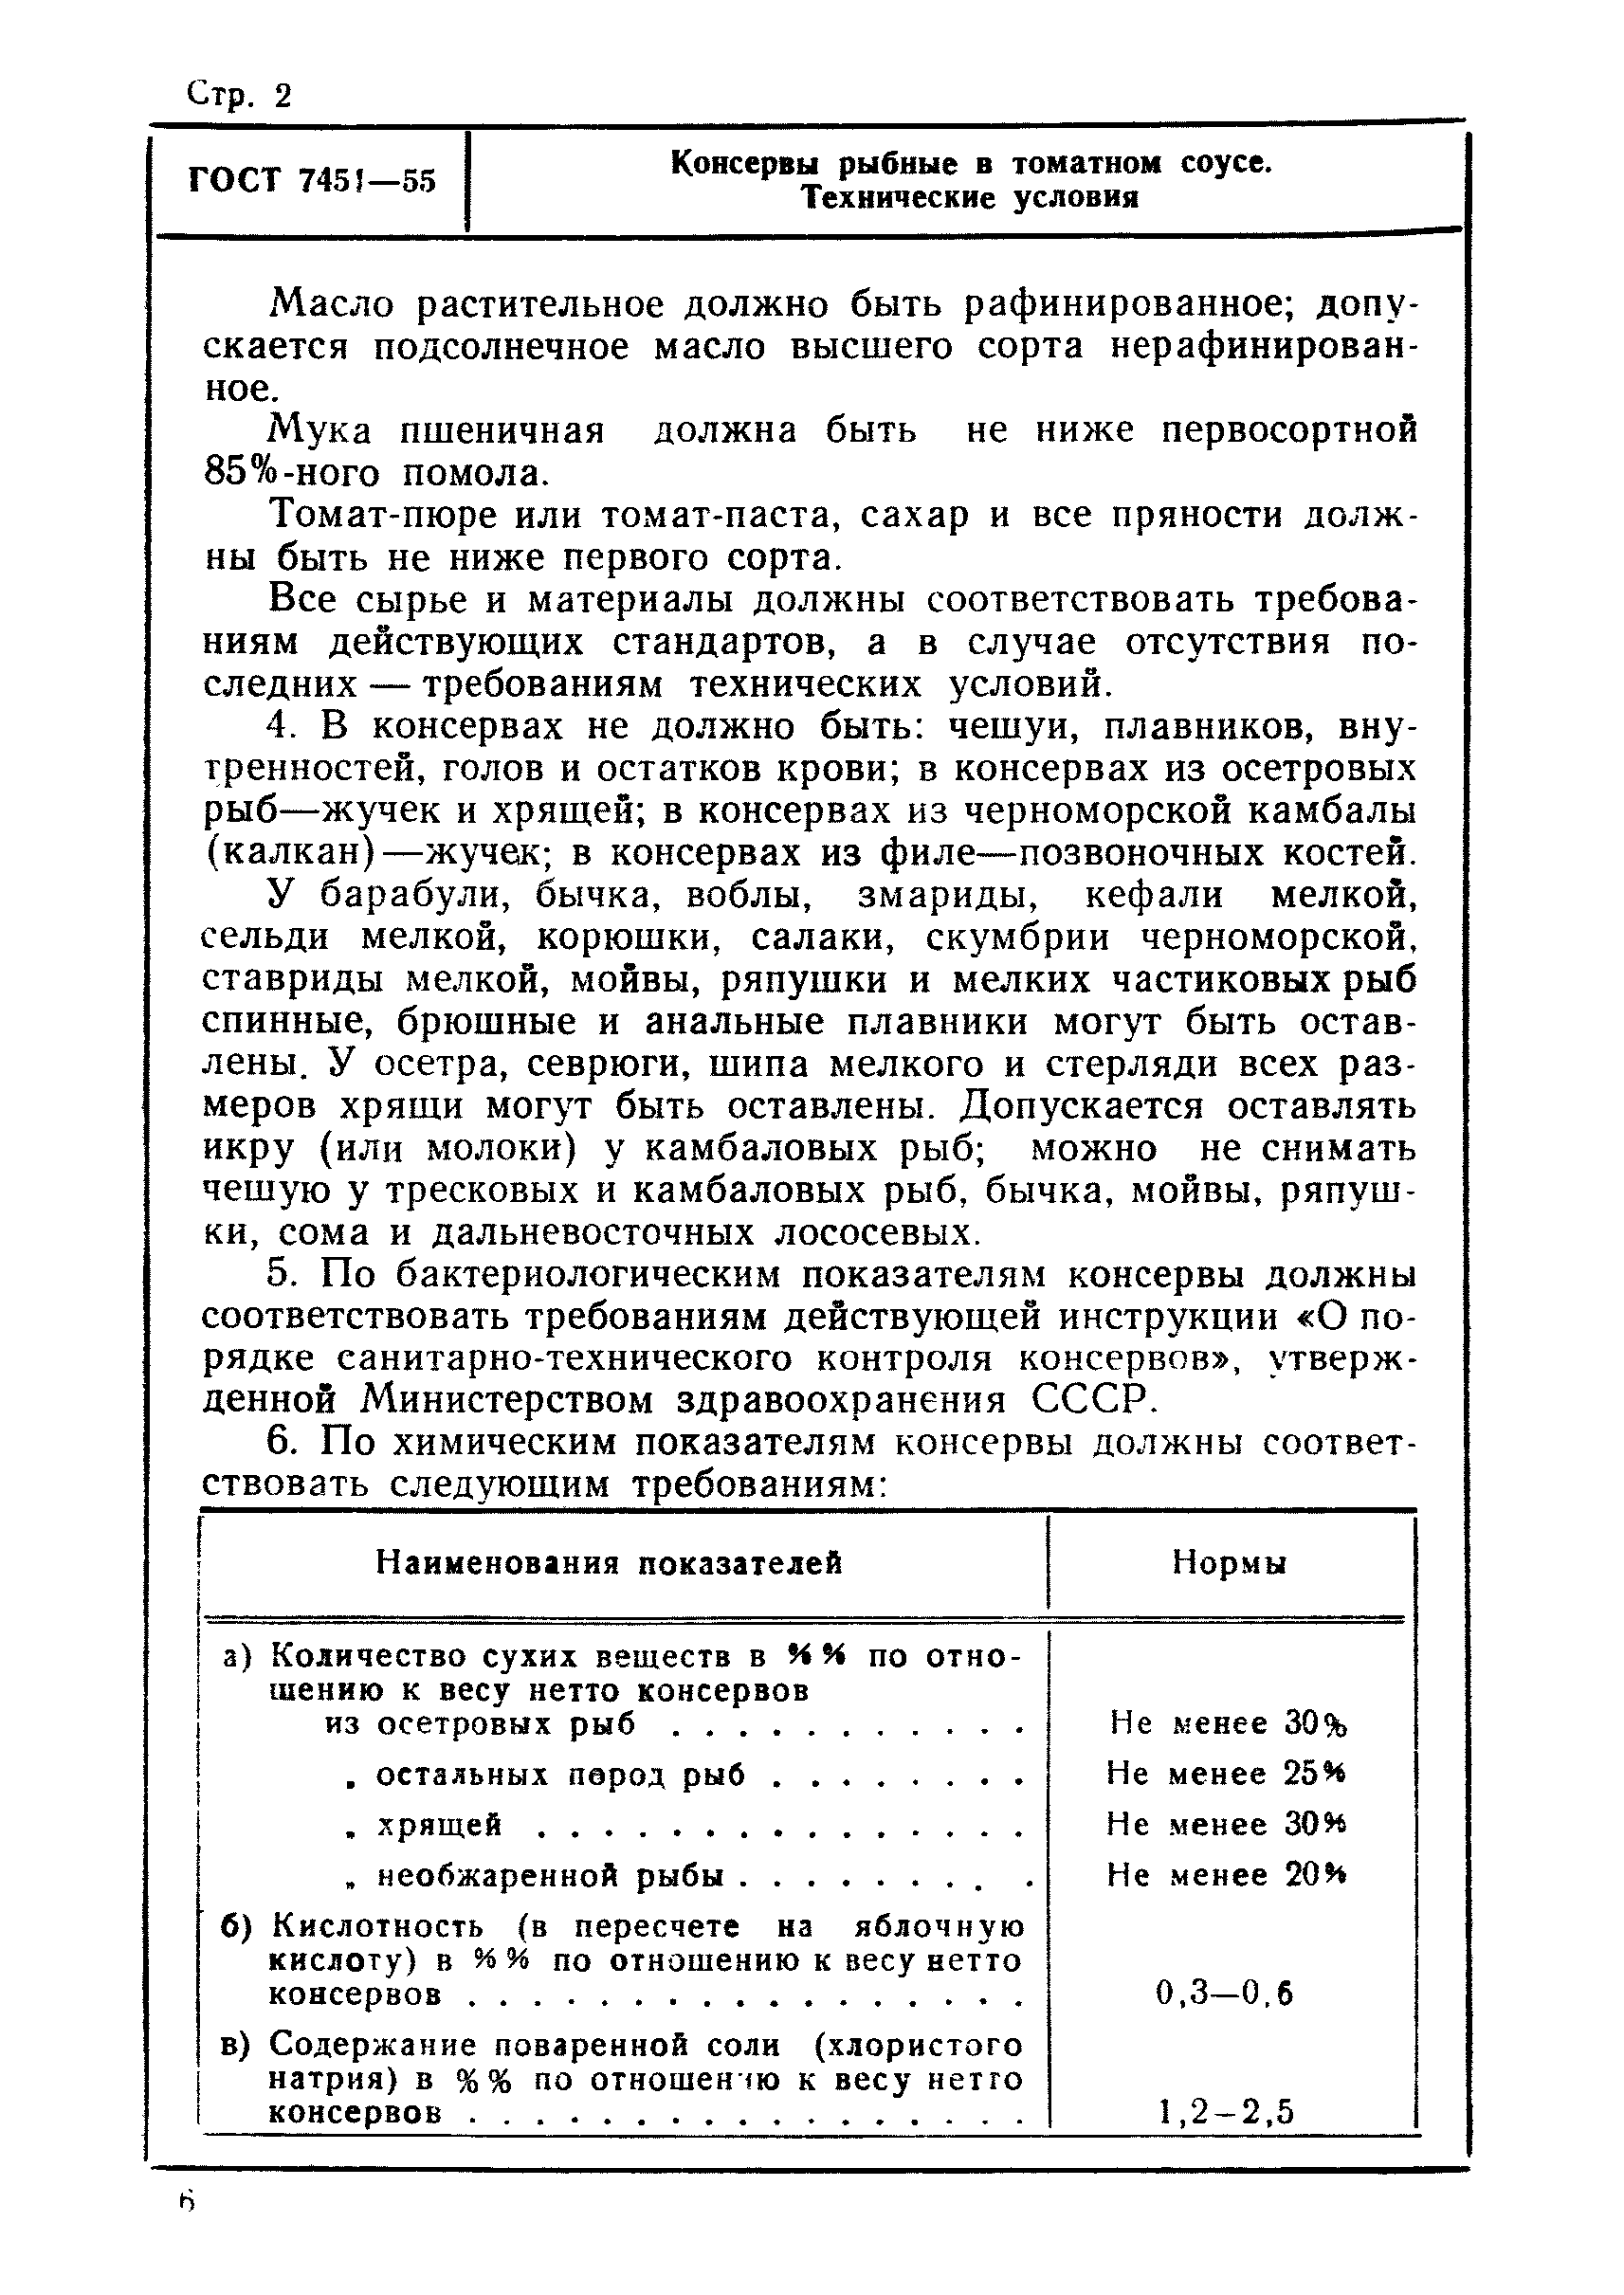 ГОСТ 7451-55